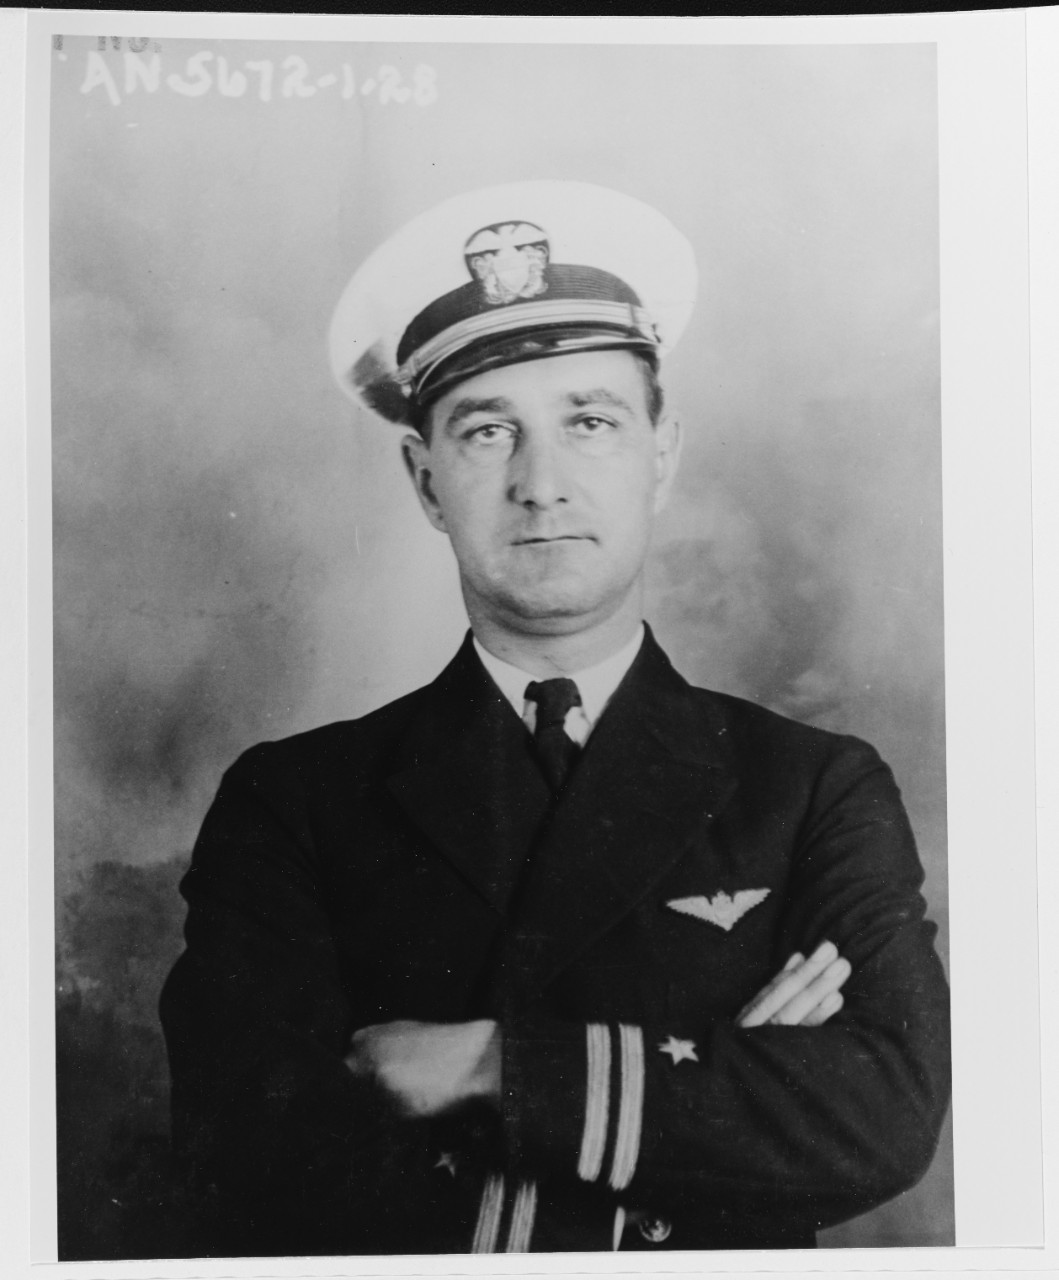 Lieutenant John G. Farrell, USN